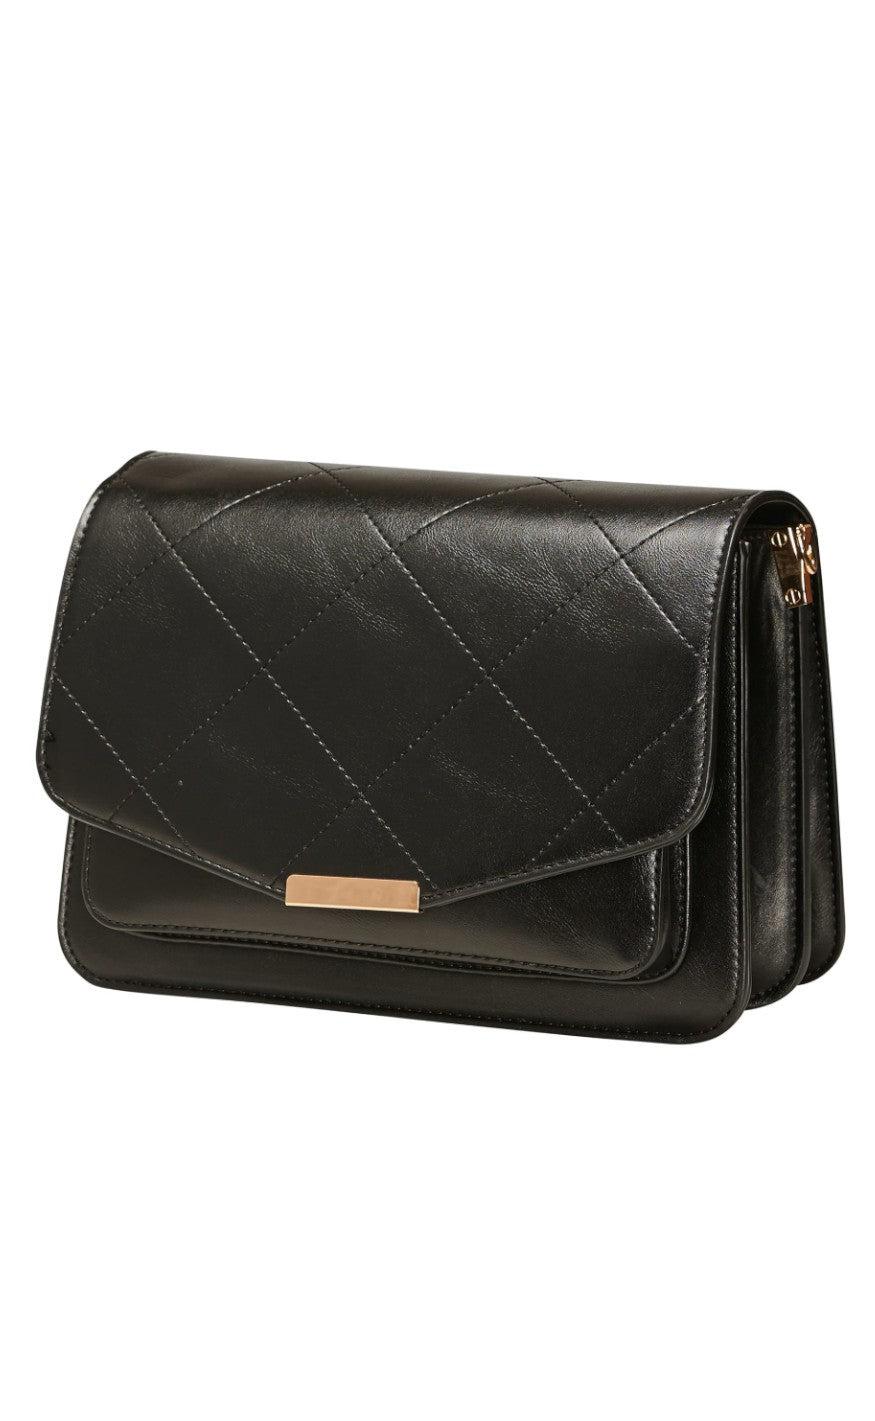 Noella Taske - Blanca Multi Compartment Black Leather Look | Hurtig levering | Fashionbystrand